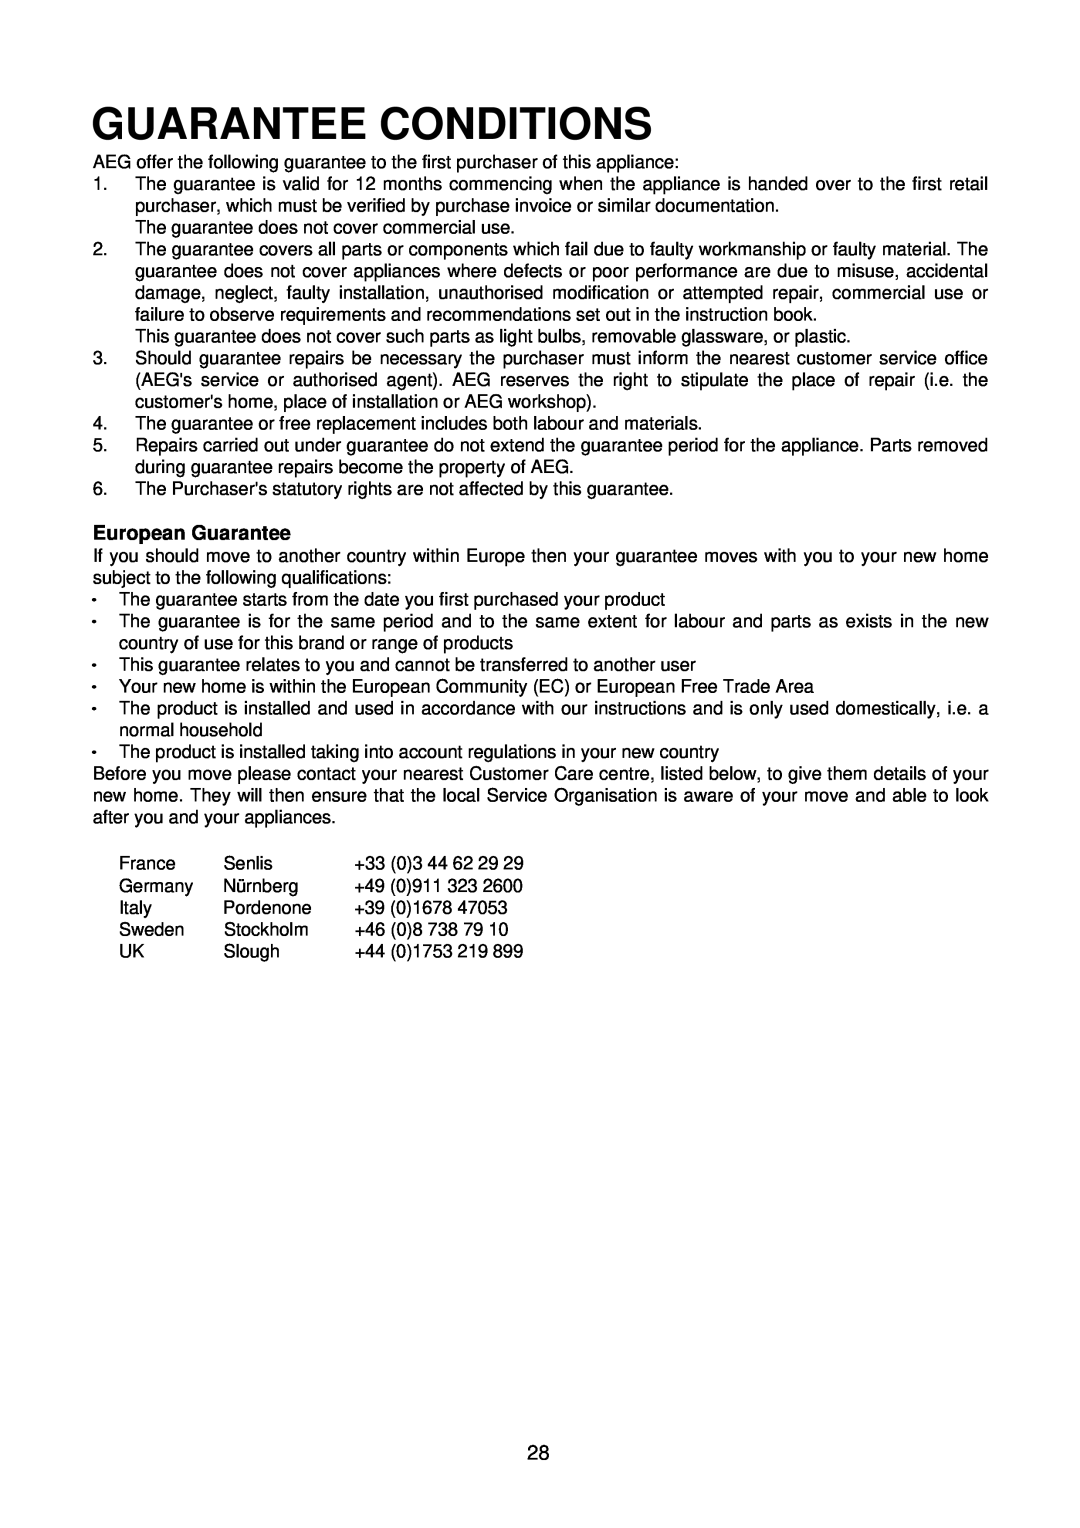 Electrolux D2160 installation instructions Guarantee Conditions, European Guarantee 